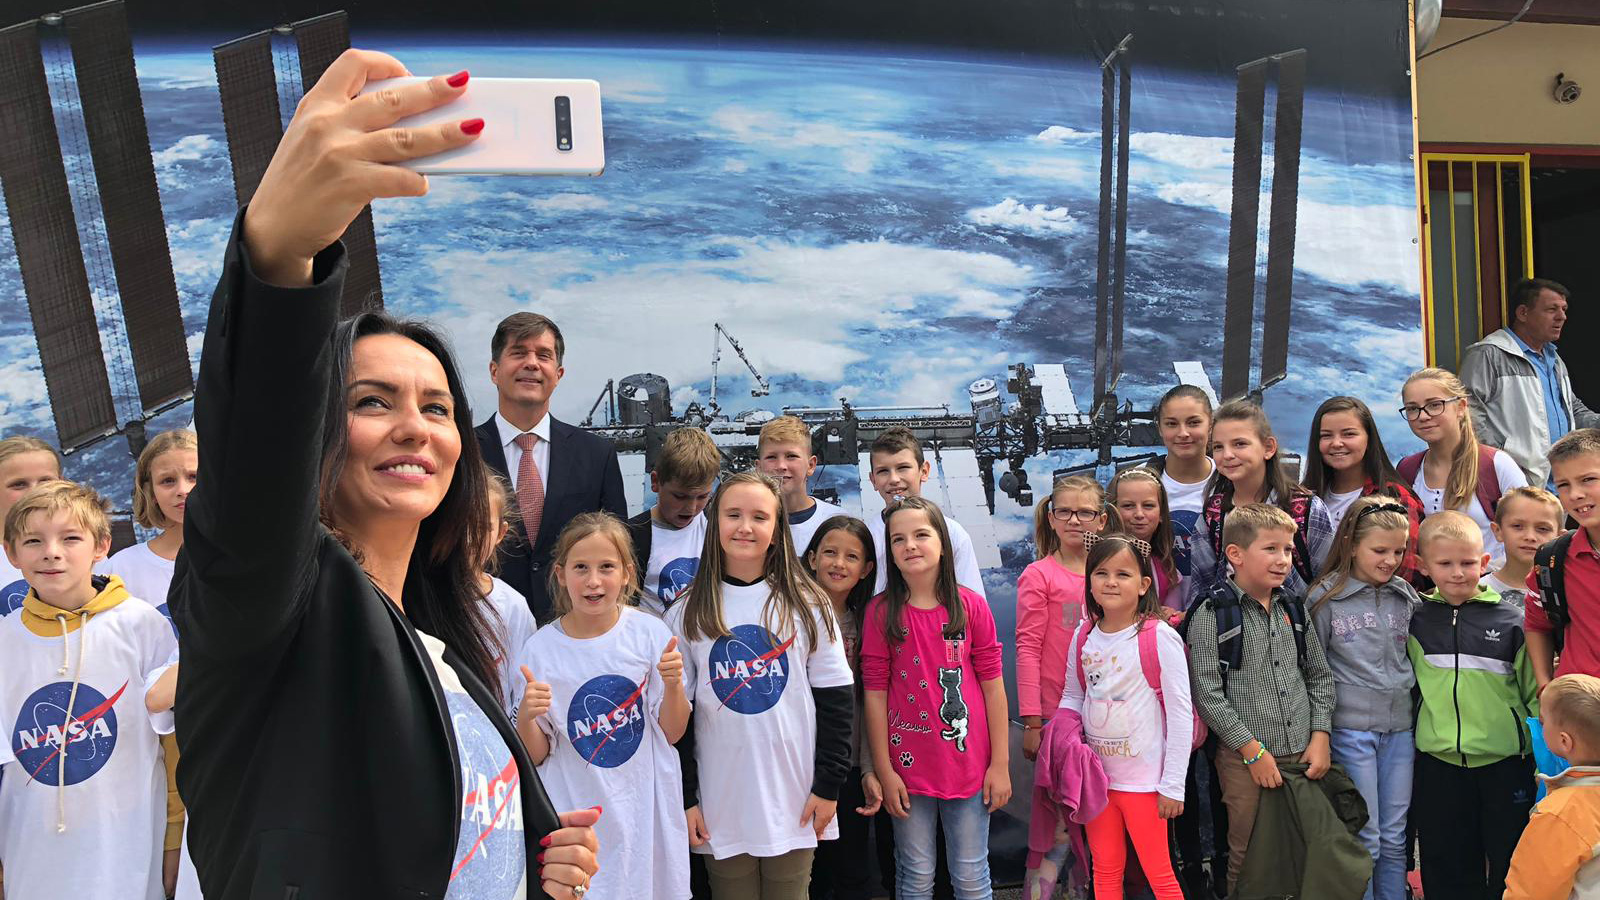 Snezana Ružičić, mayor of the Balkan municipality of Jezero, snaps a selfie of the ambassador with local school children.